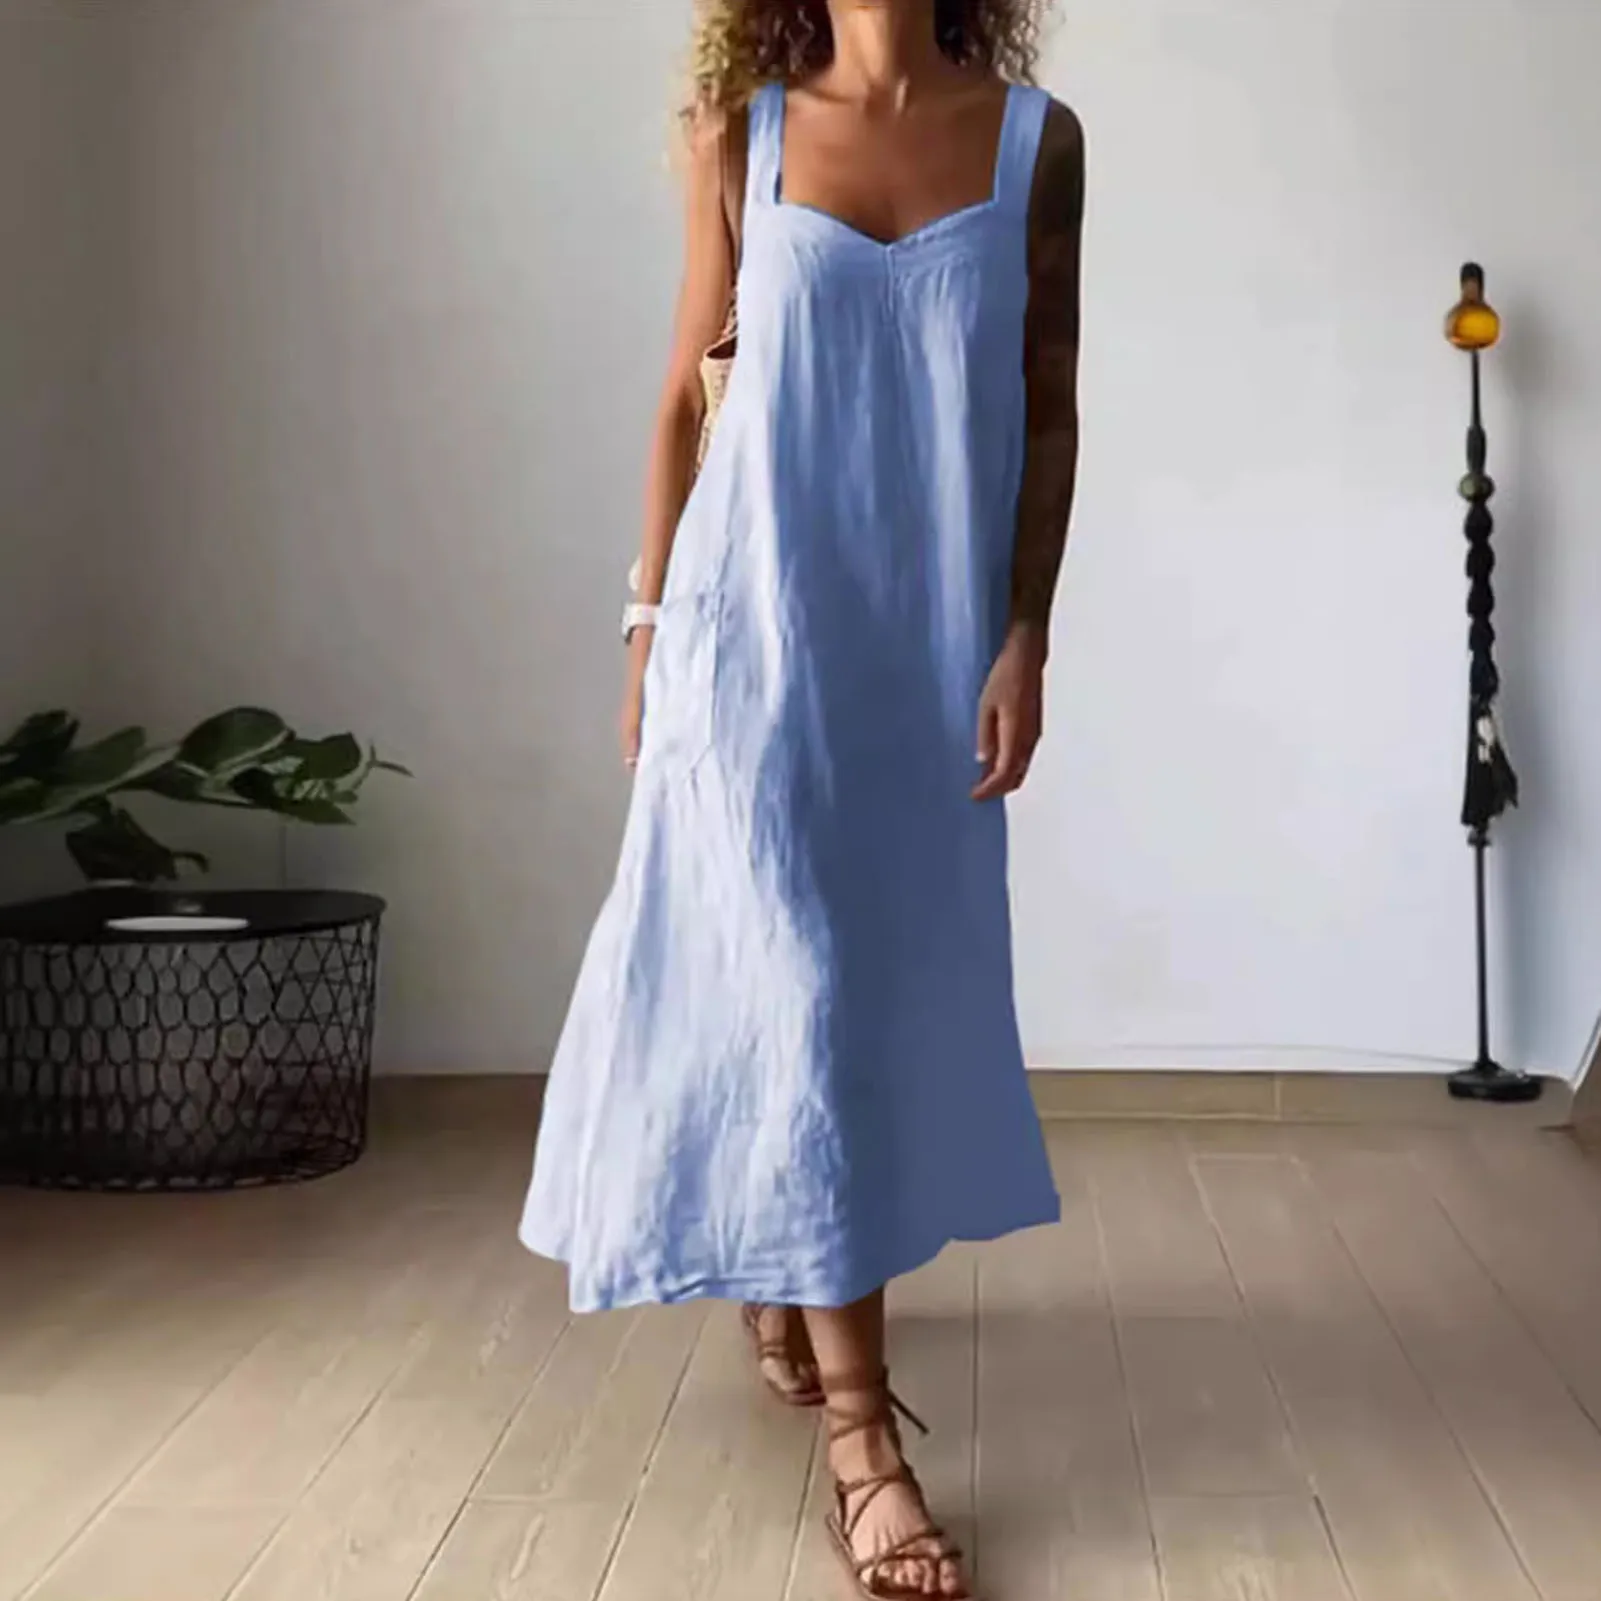 50% Hot Sales!!! Women Dress Sling Breathable Summer Clothing Women Sleeveless Long Dress for Shopping